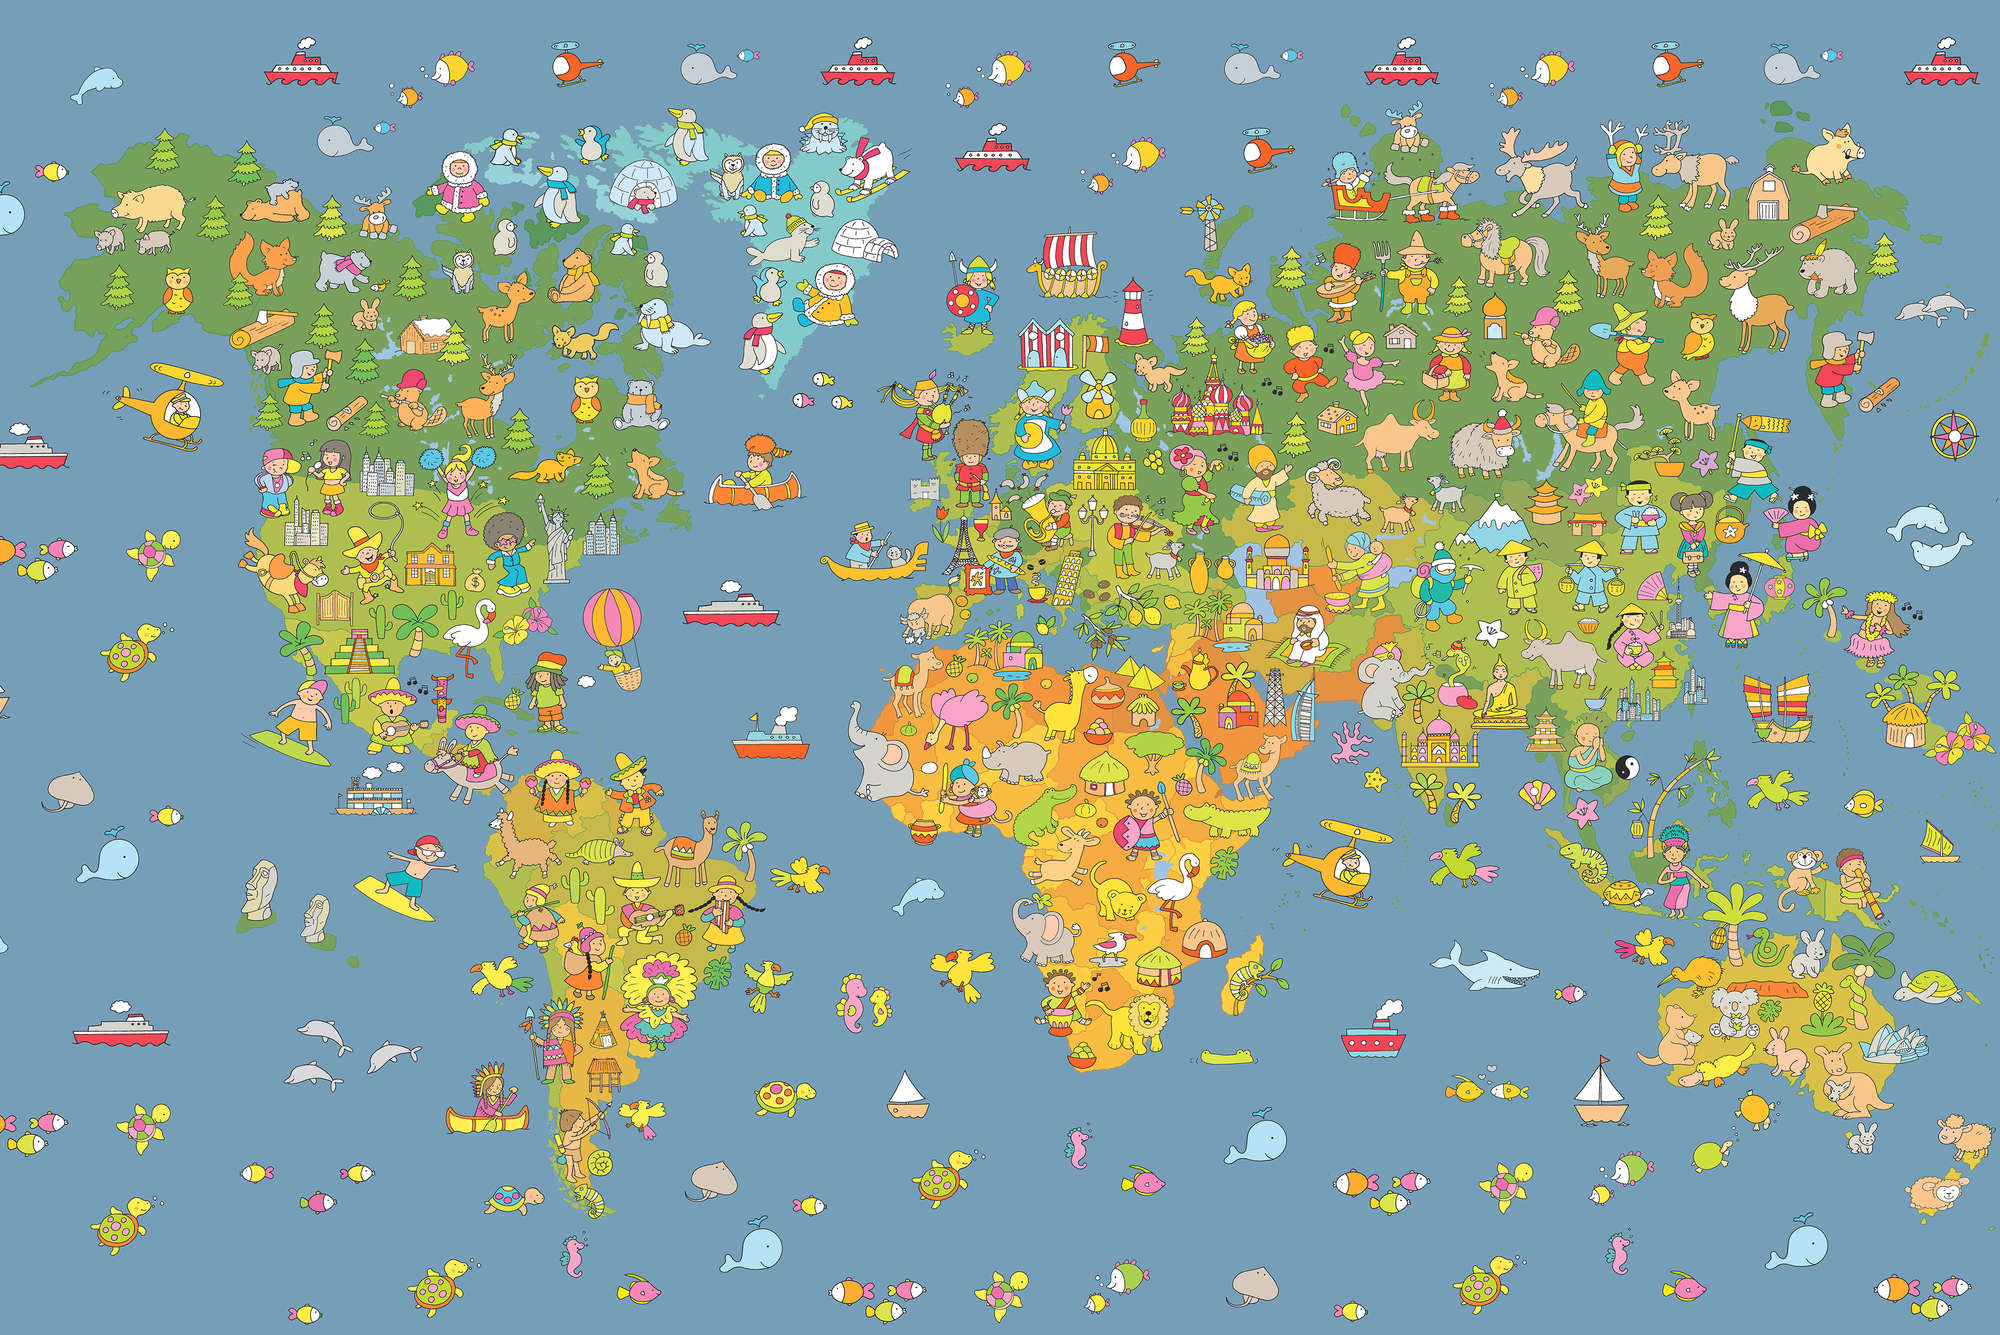             Kids mural world map with country symbols on matt smooth fleece
        